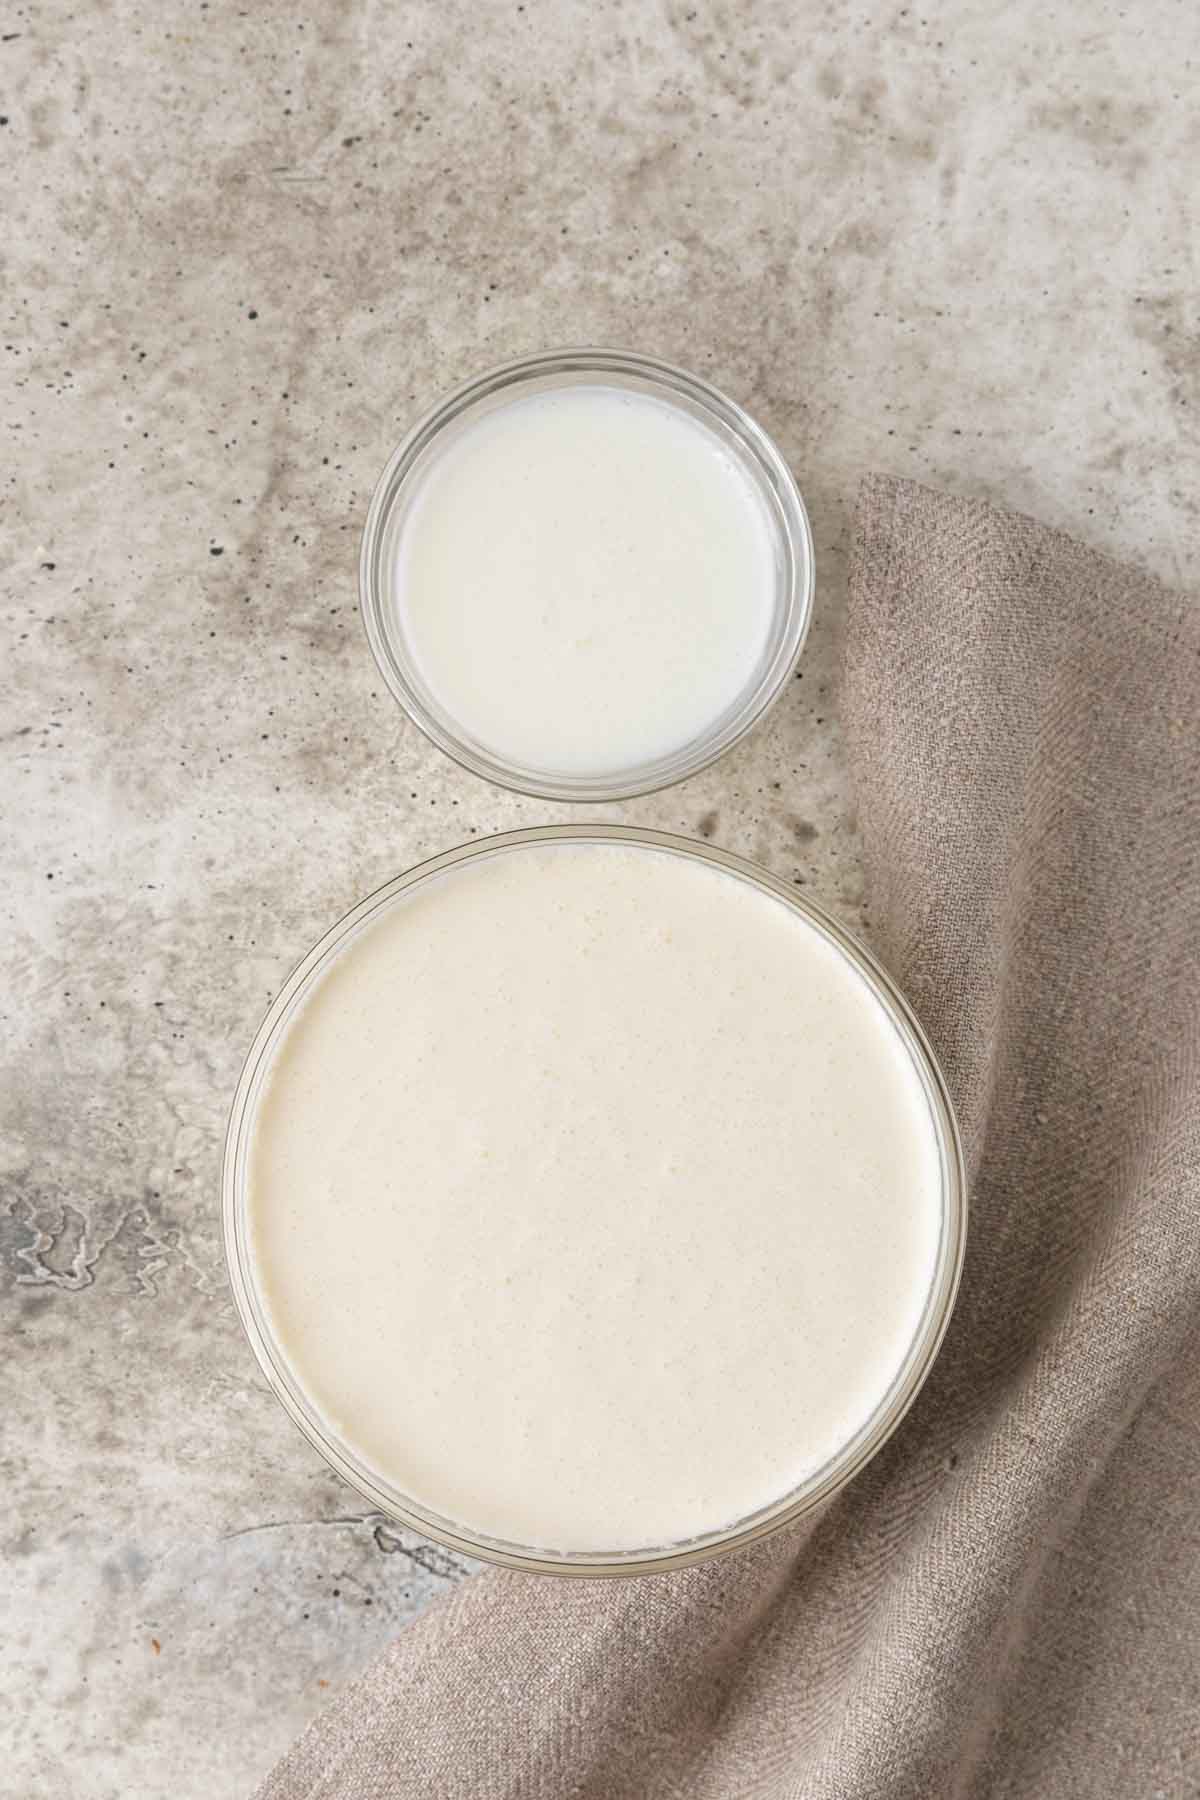 Creme Fraiche cream and buttermilk in separate bowls